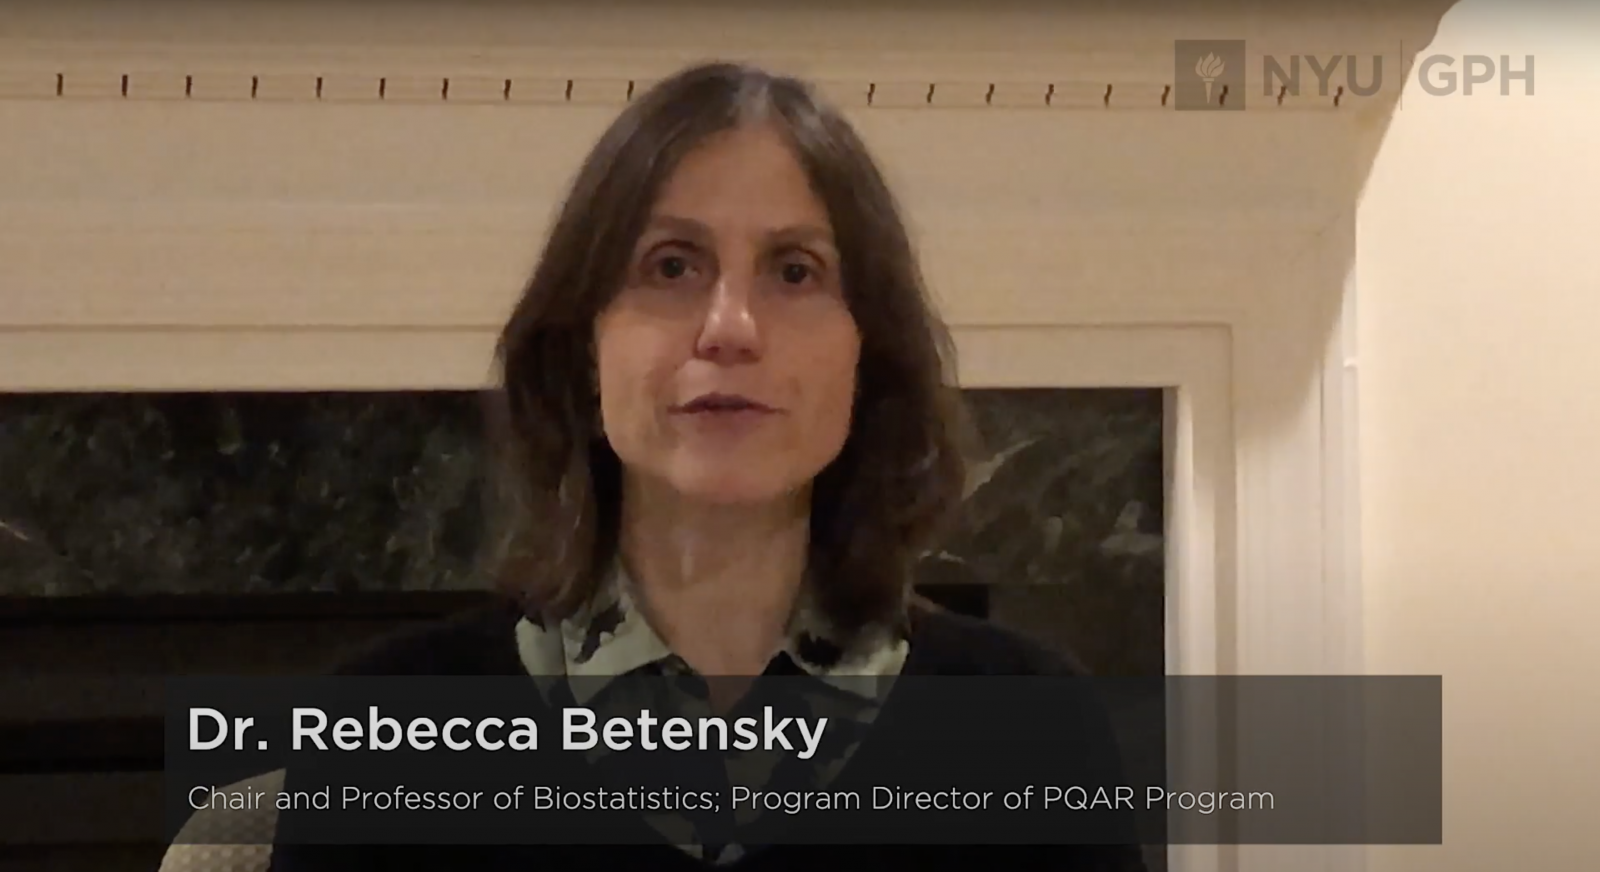 Dr. Rebecca Betensky, Chair and Professor of Biostatistics